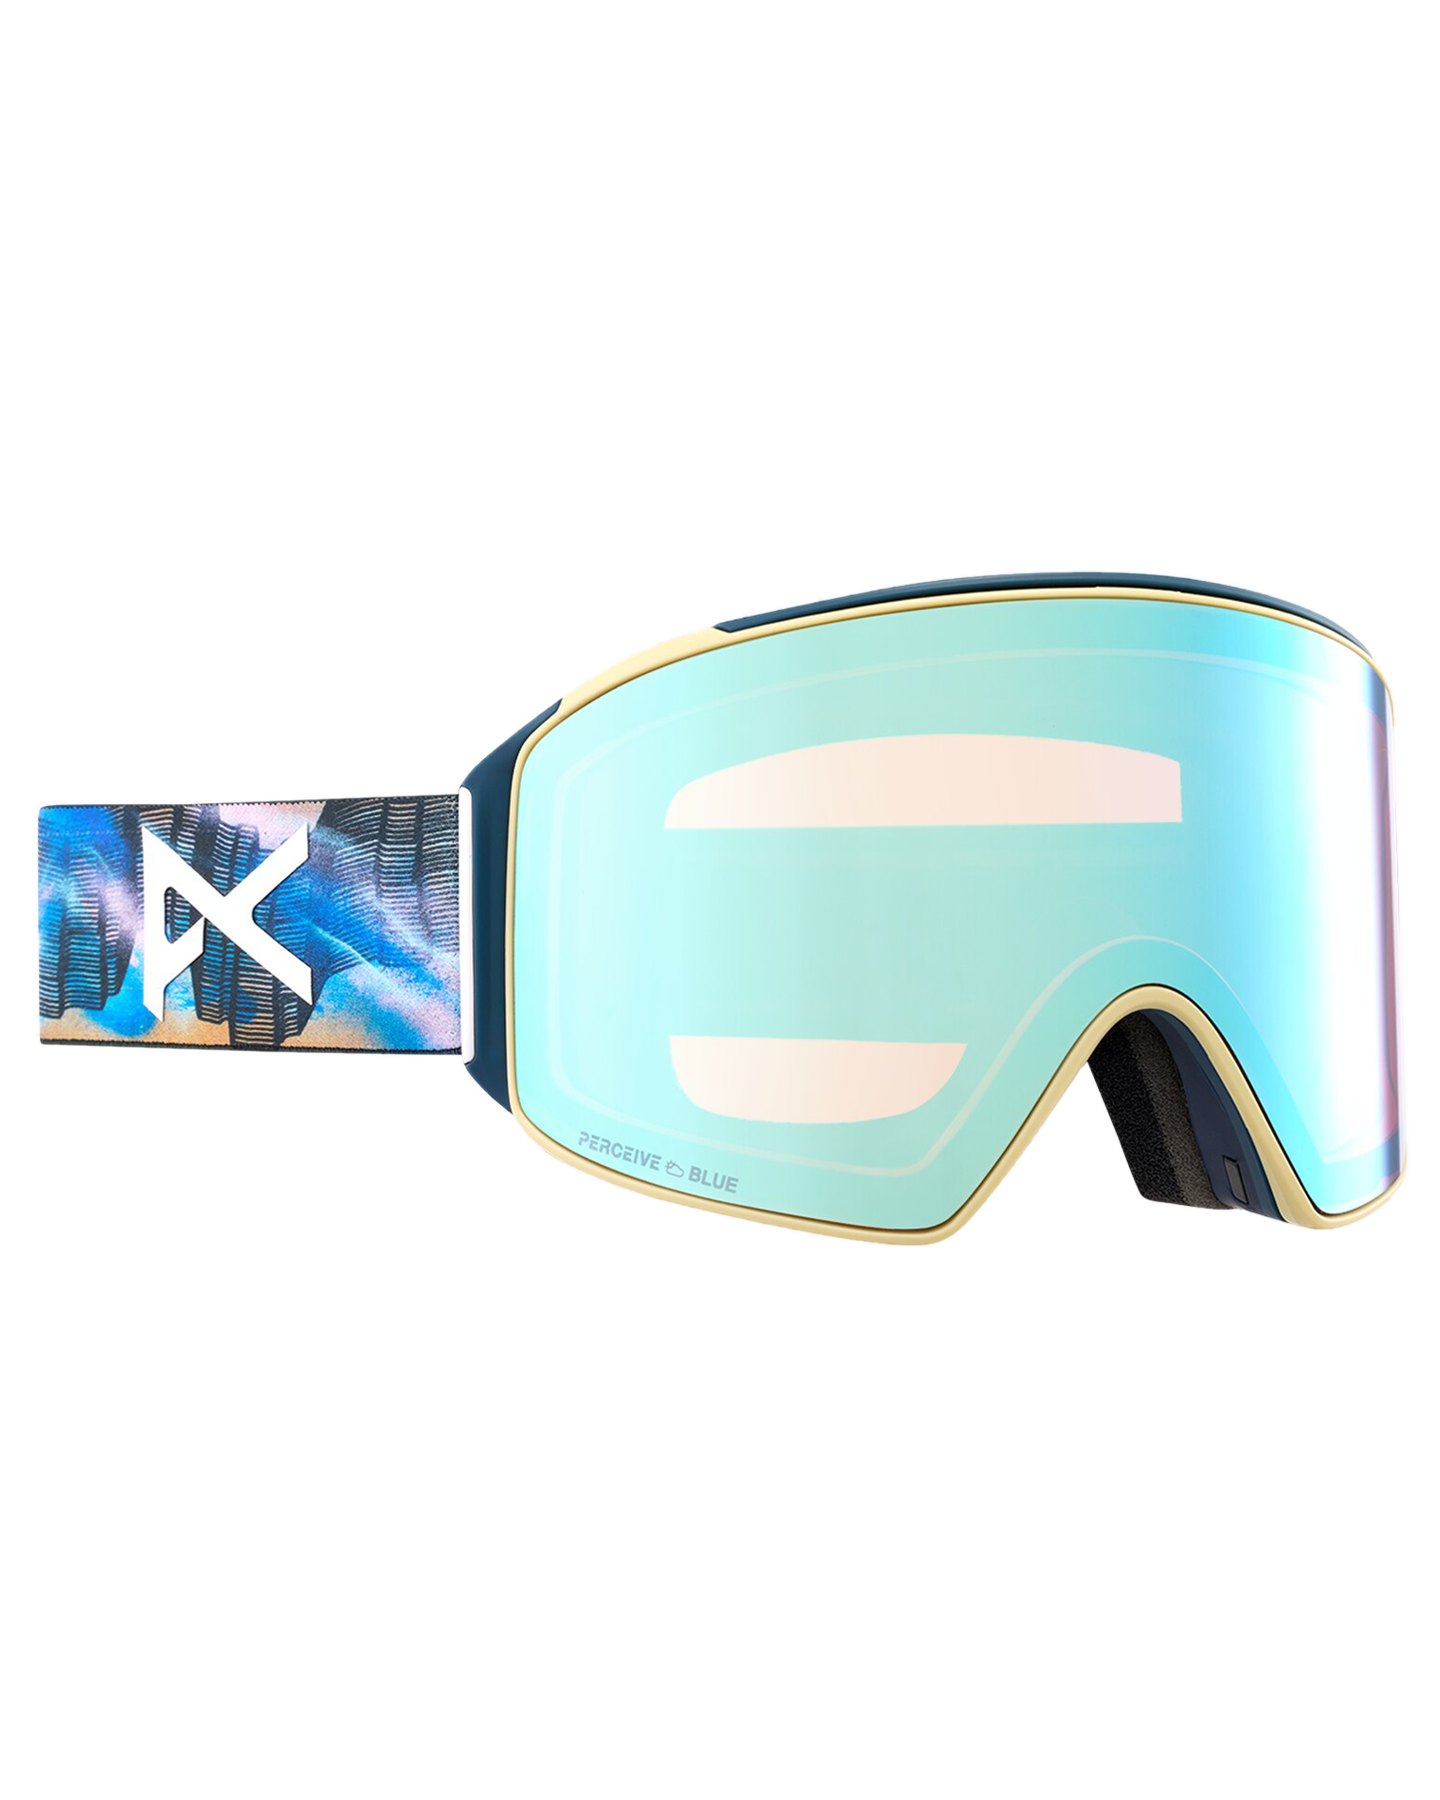 Anon M4 Cylindrical Low Bridge Snow Goggles + Bonus Lens + Mfi® Face Mask - Chet Malinow/Perceive Variable Blue Lens Men's Snow Goggles - Trojan Wake Ski Snow